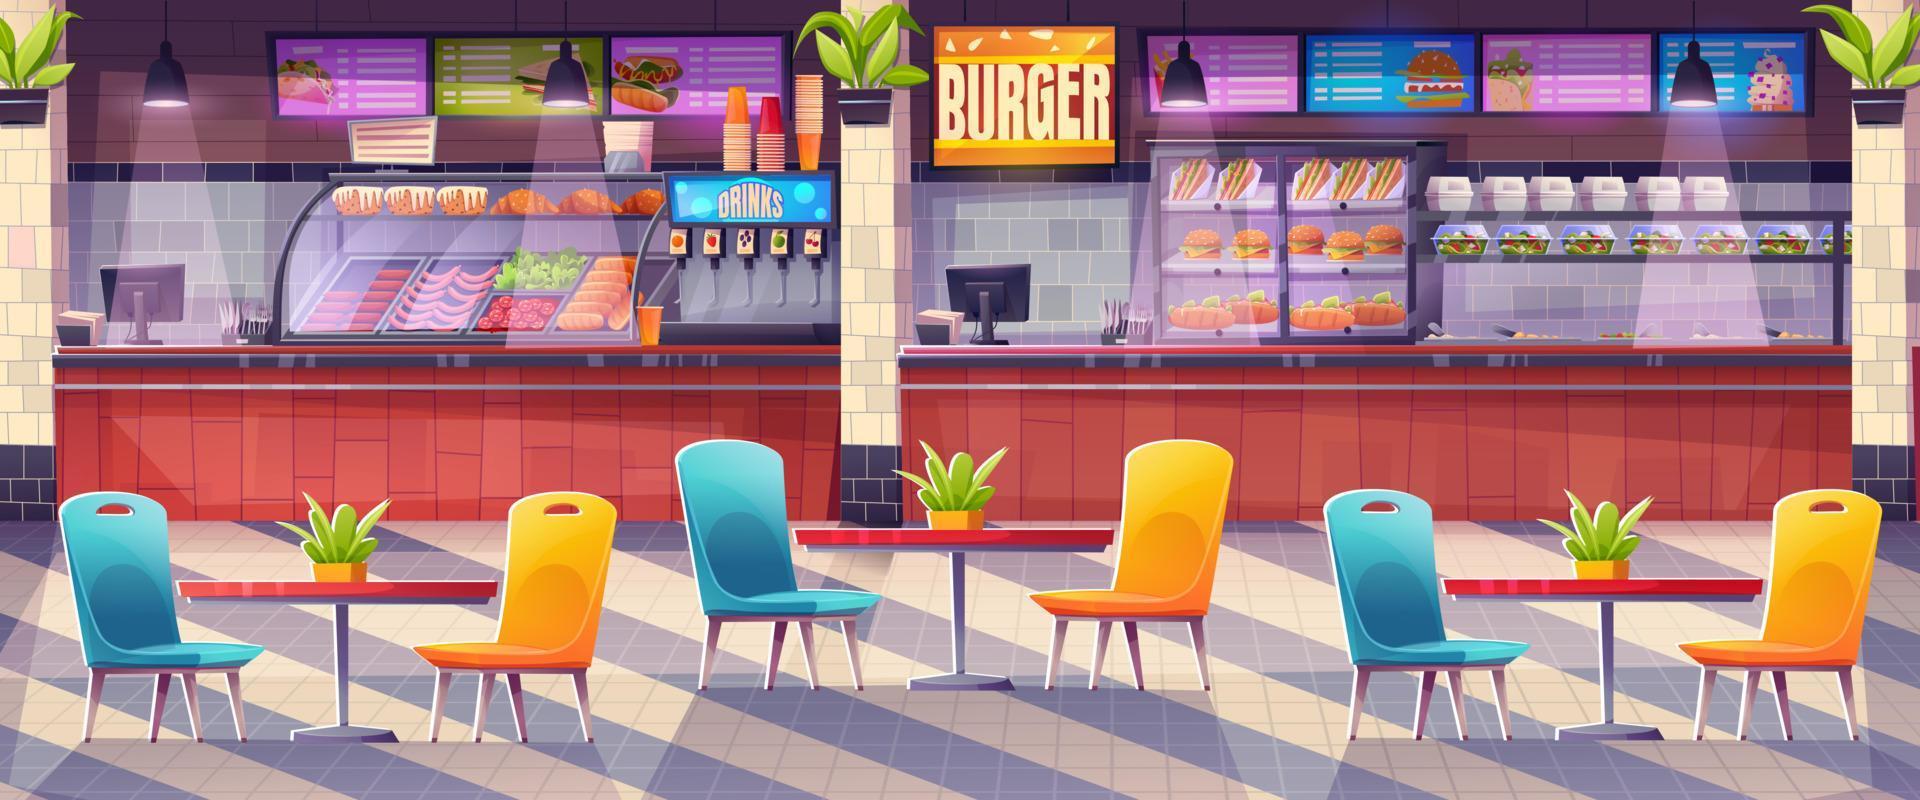 Cartoon food court interior design vector